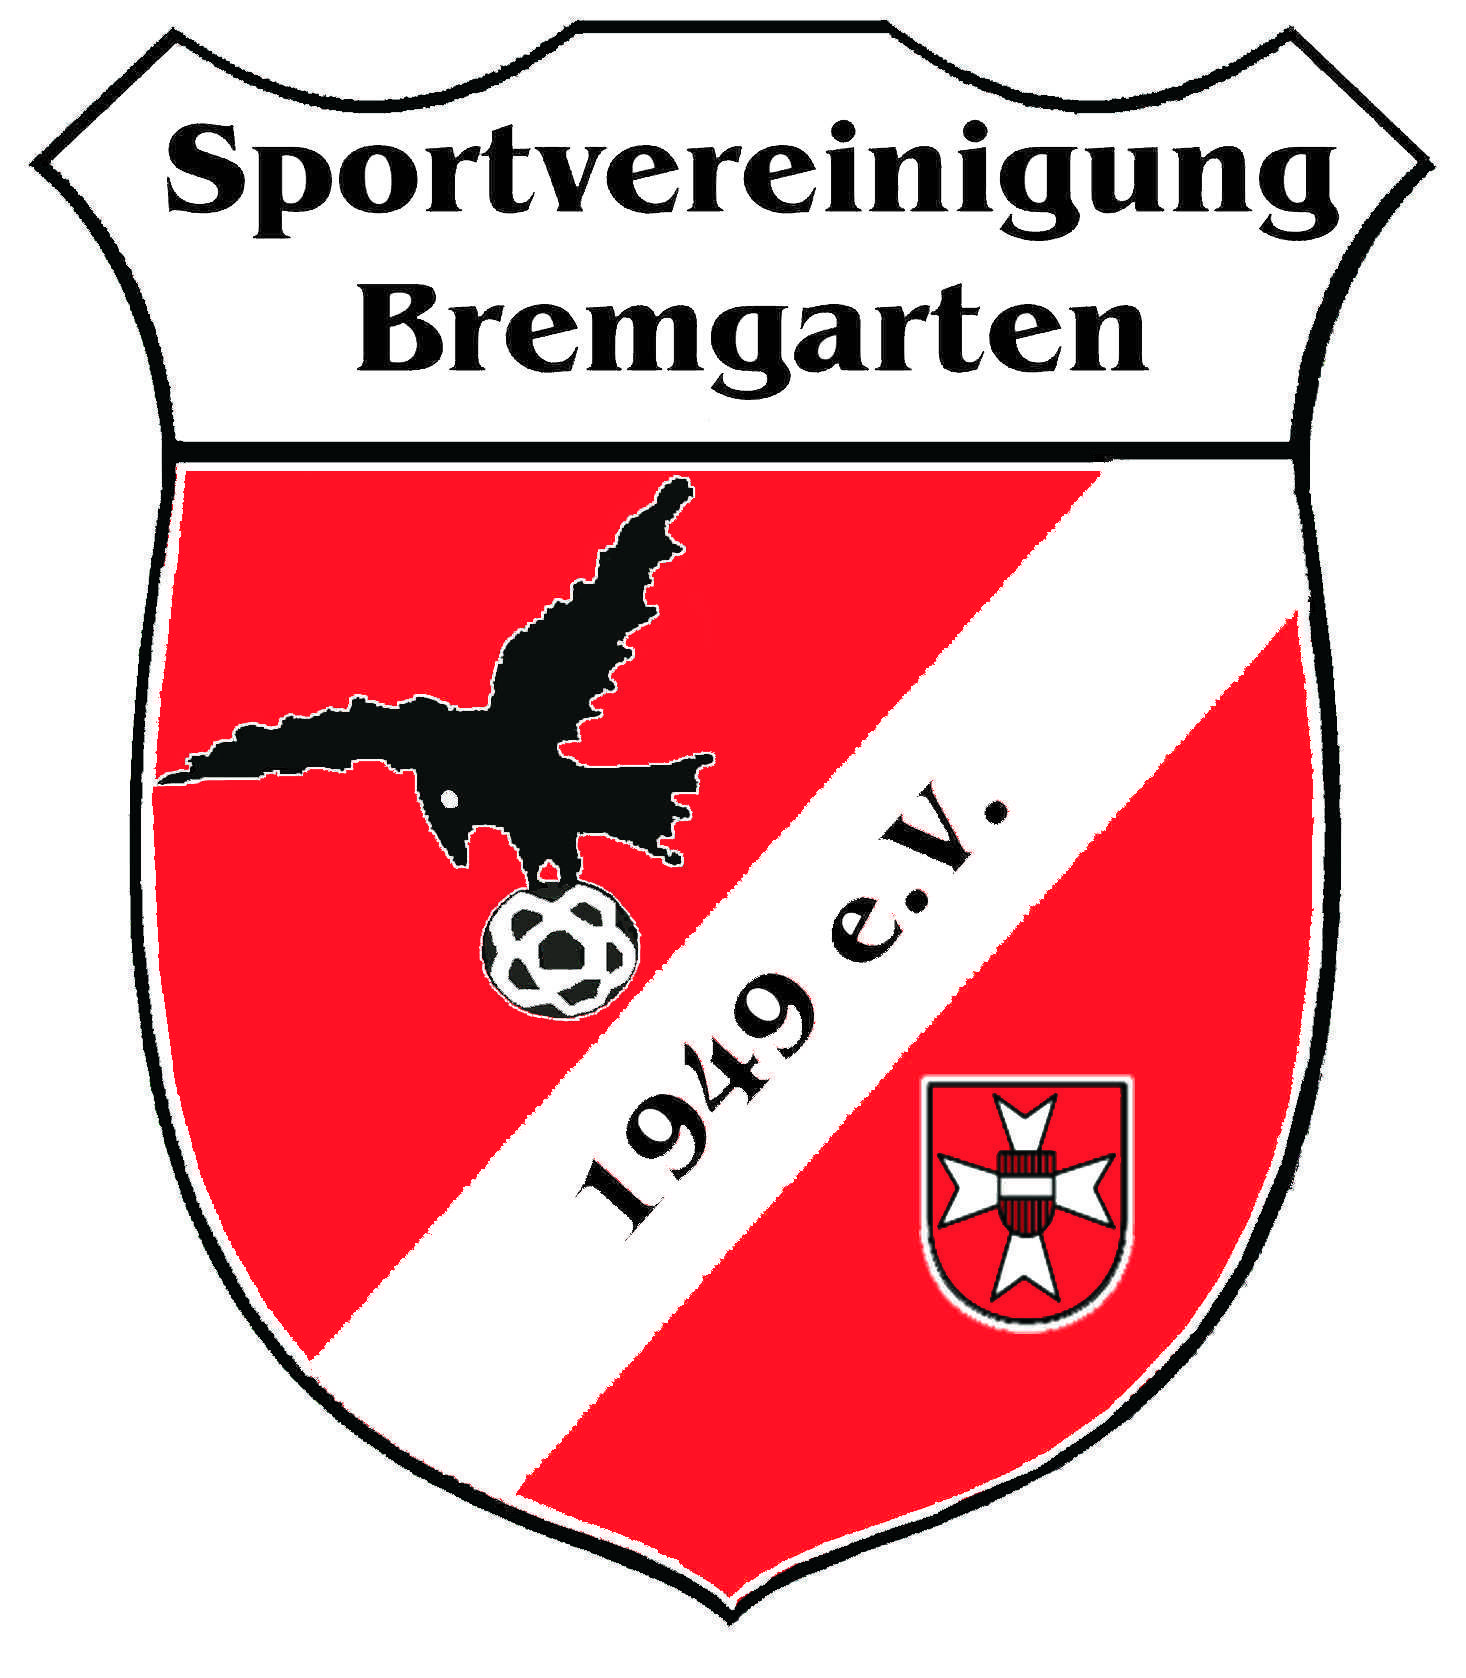 Sportvereinigung Bremgarten e.V.